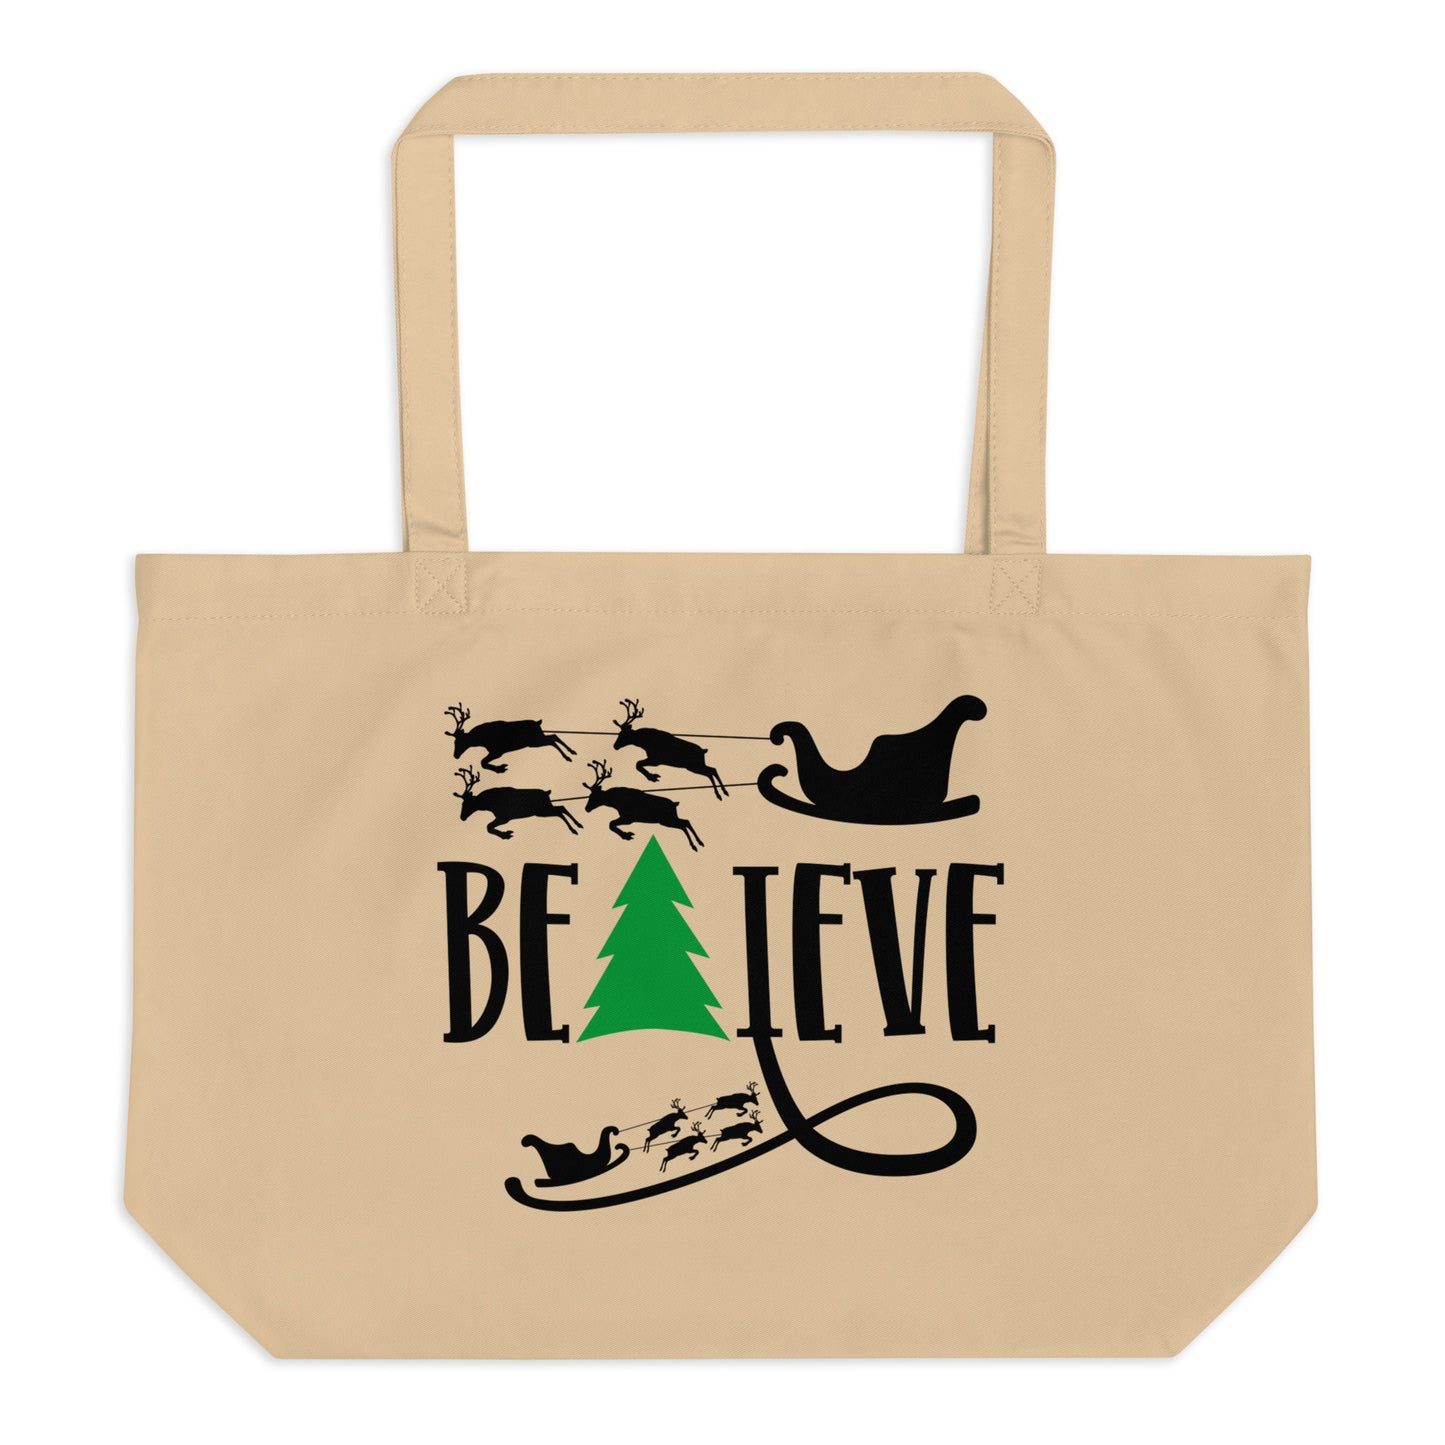 Believe Large organic tote bag